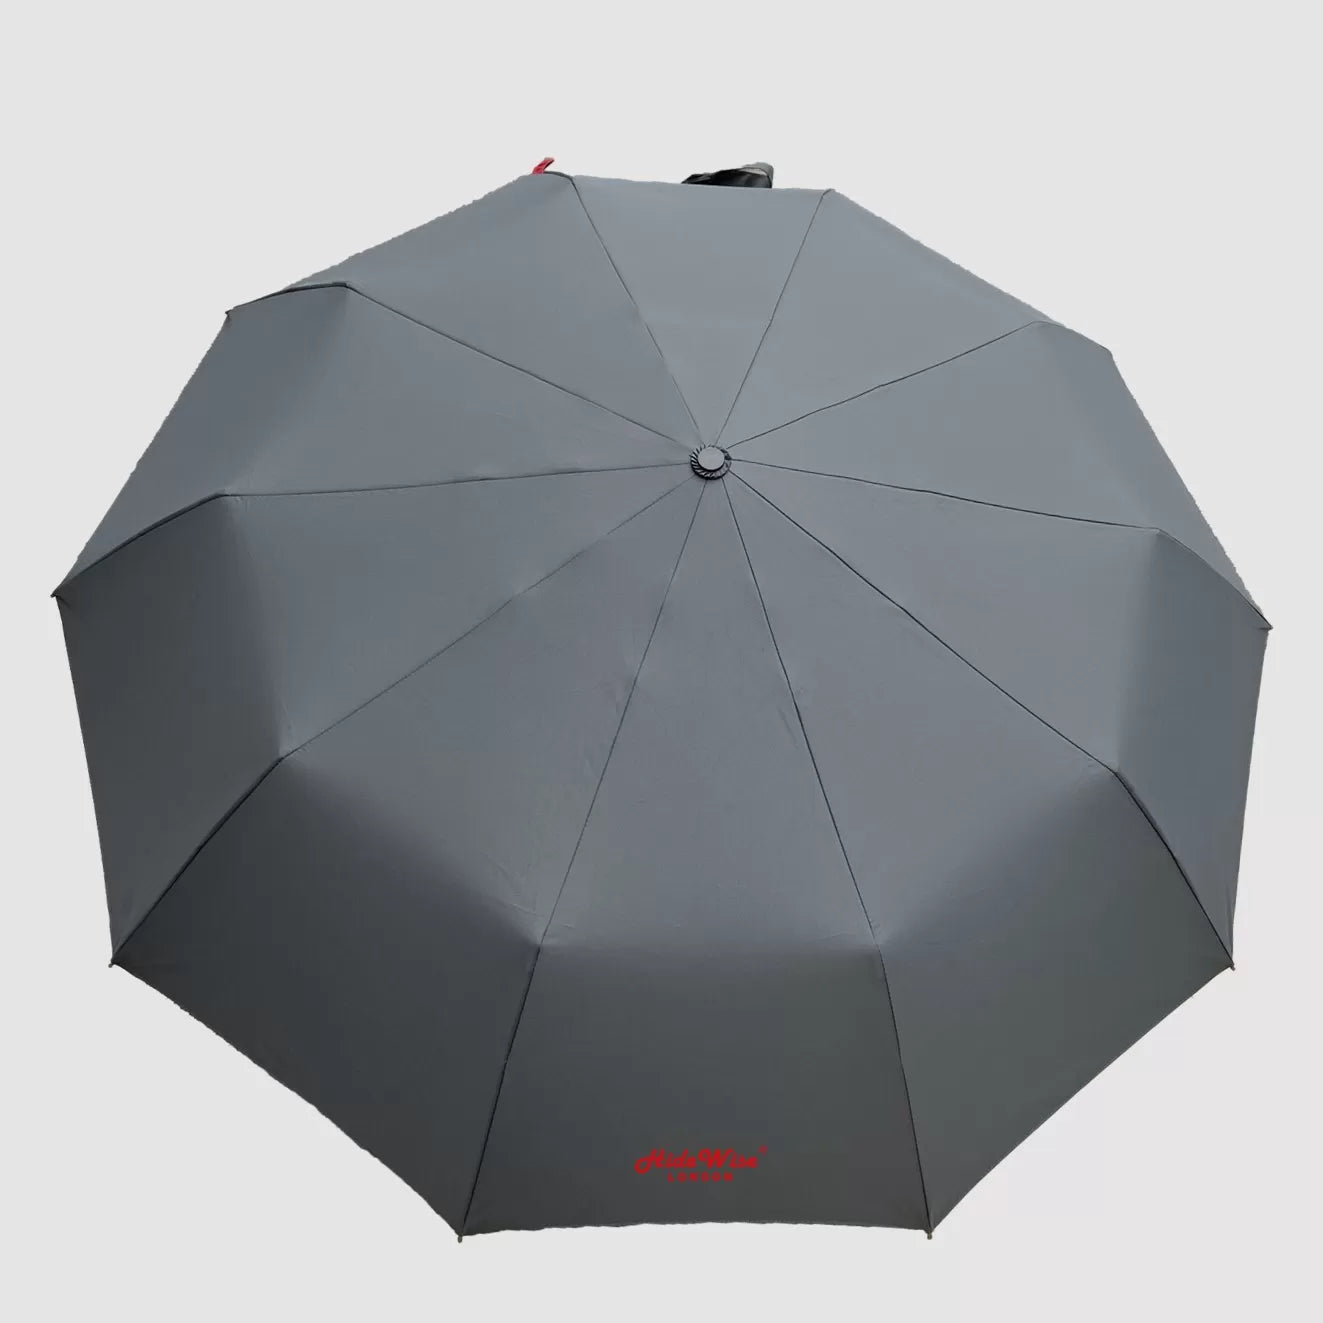 Luxury Automatic Umbrella Ultra Strong Anti-UV Grey Brolly by Hidewise London